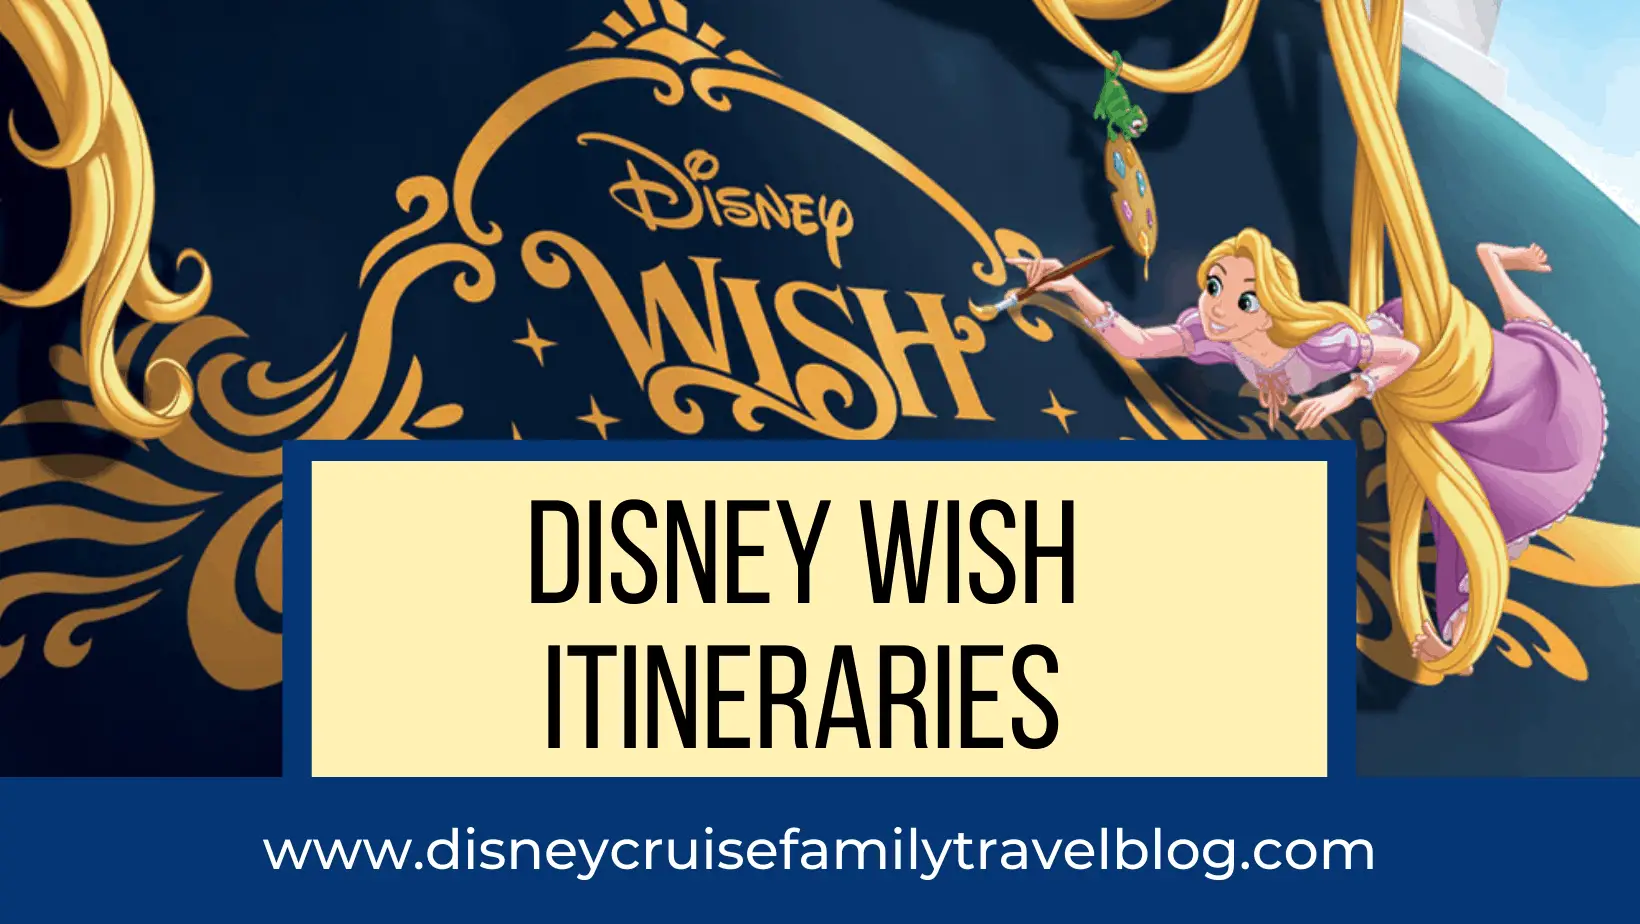 Disney Wish Itineraries The Disney Cruise Family Travel Blog